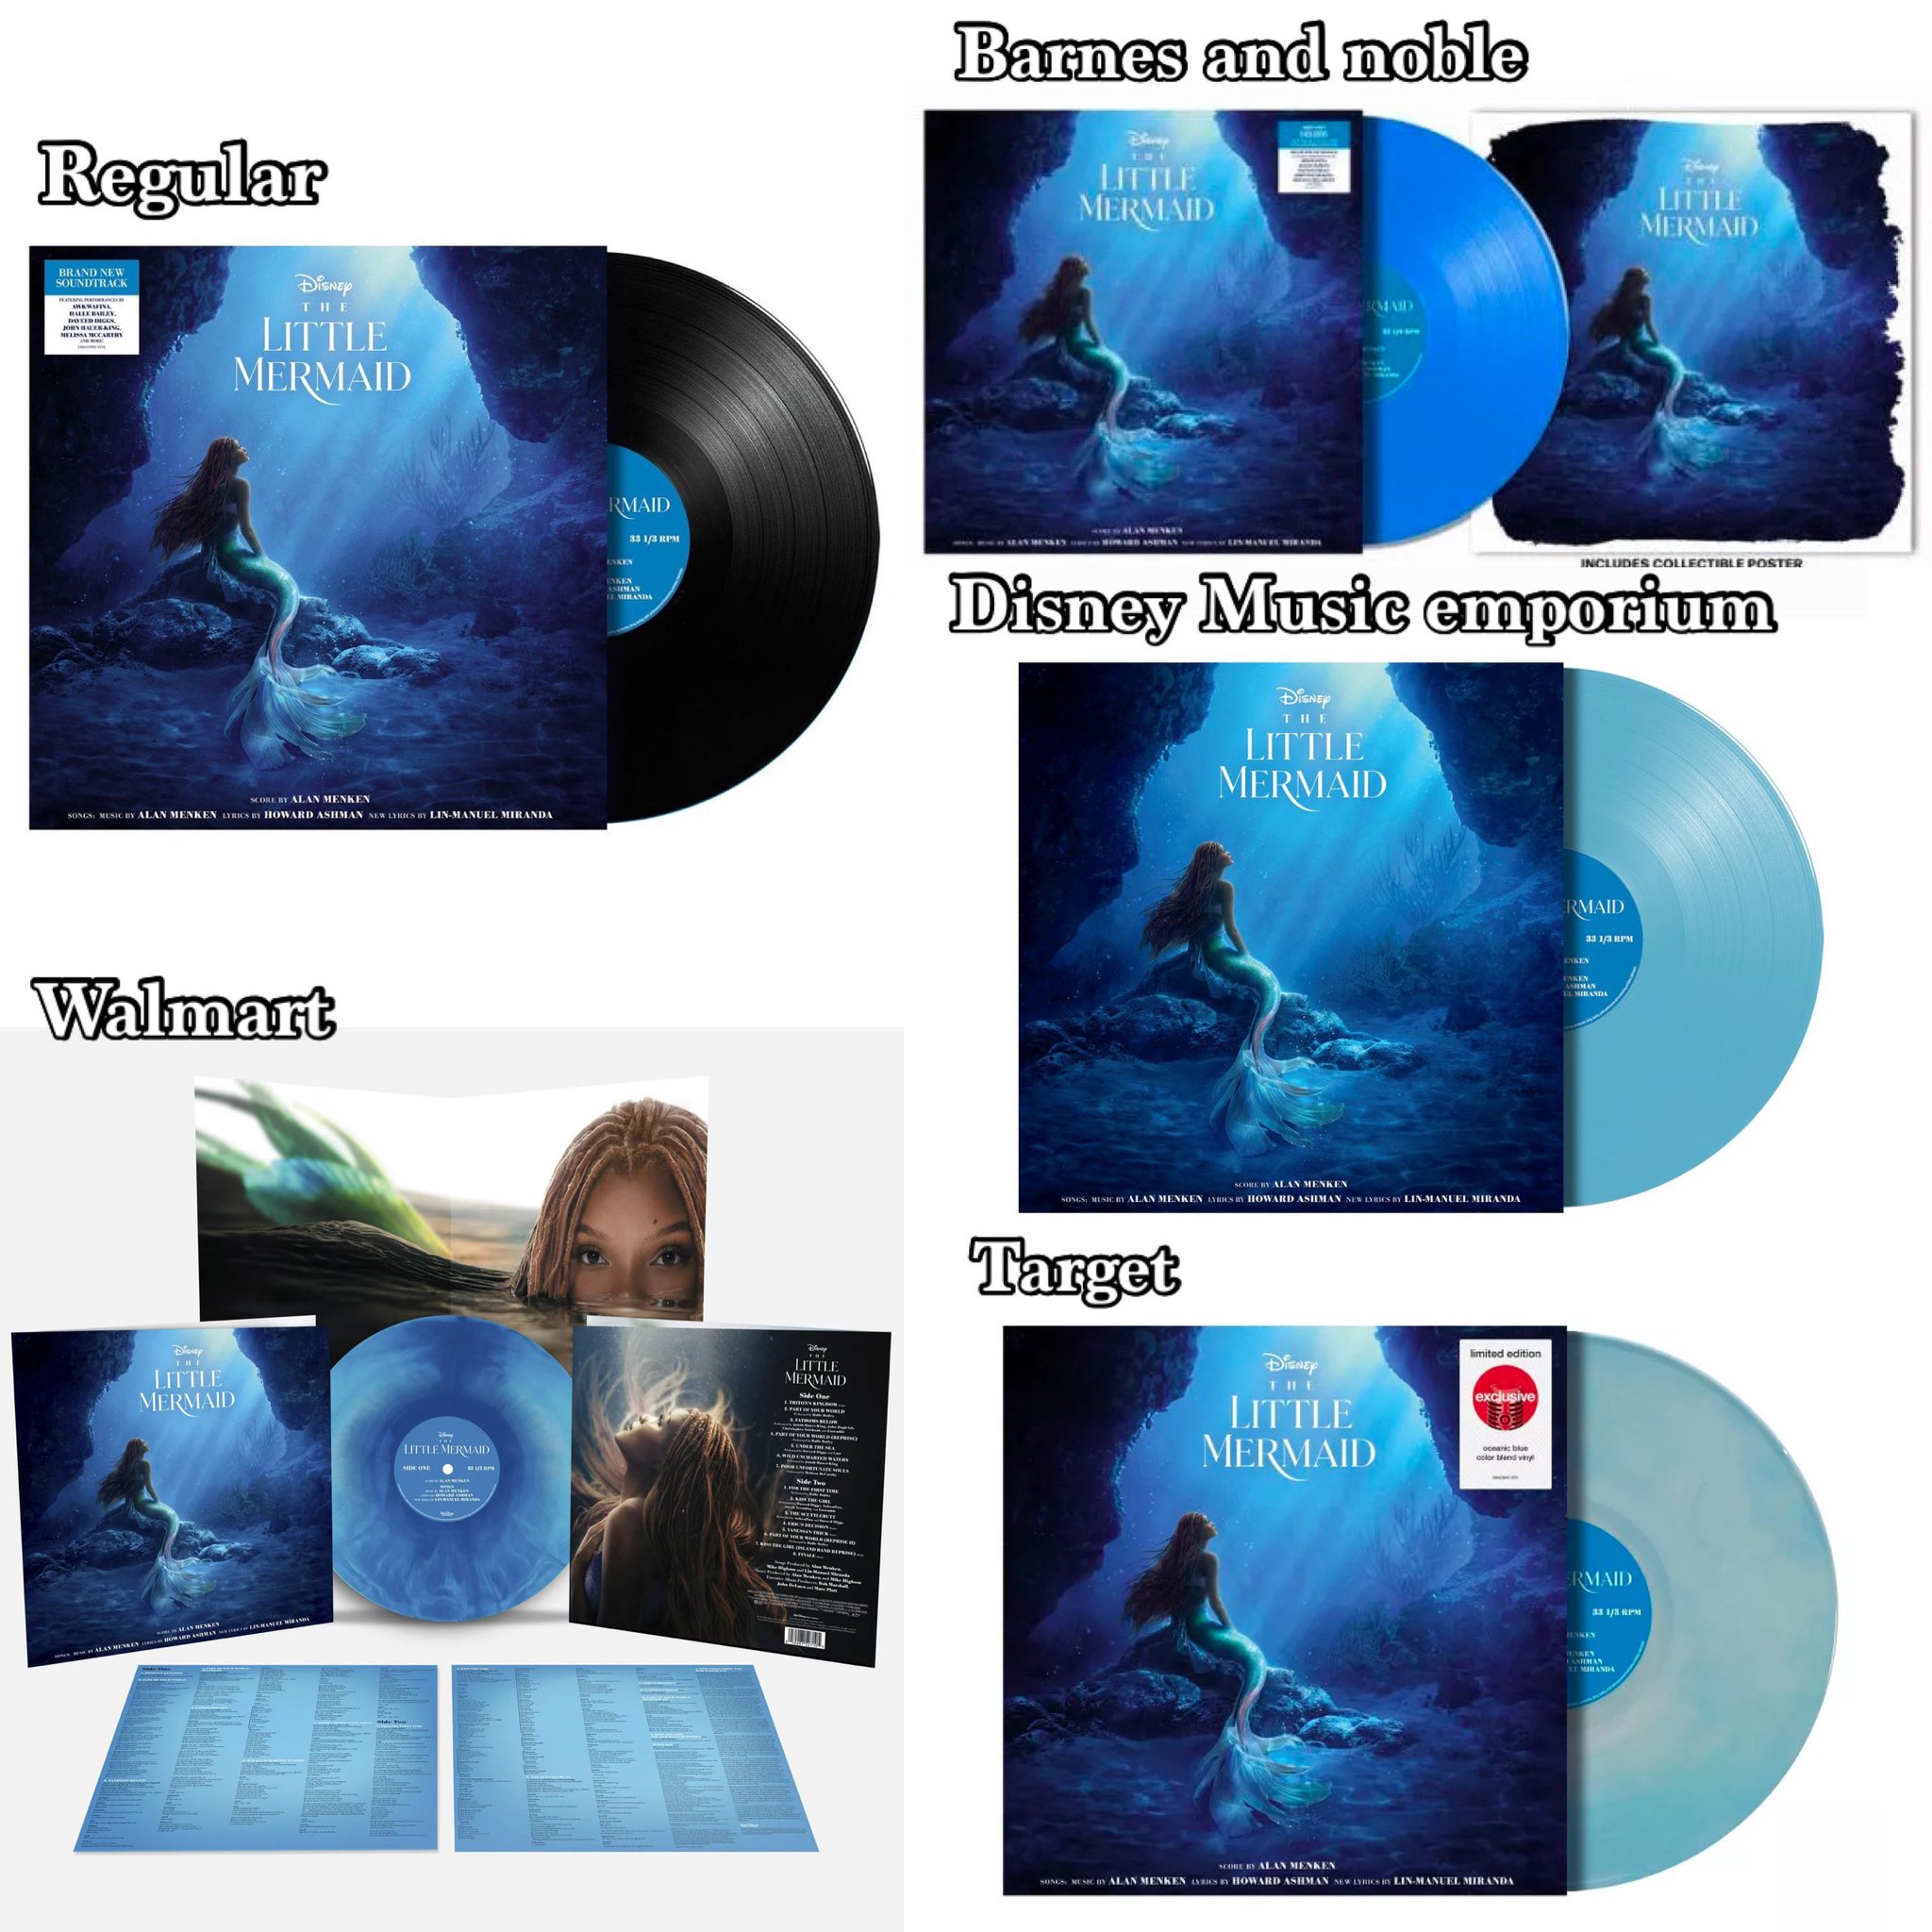 The Little Mermaid 2023 Soundtrack: Where to Stream, Buy Album Online